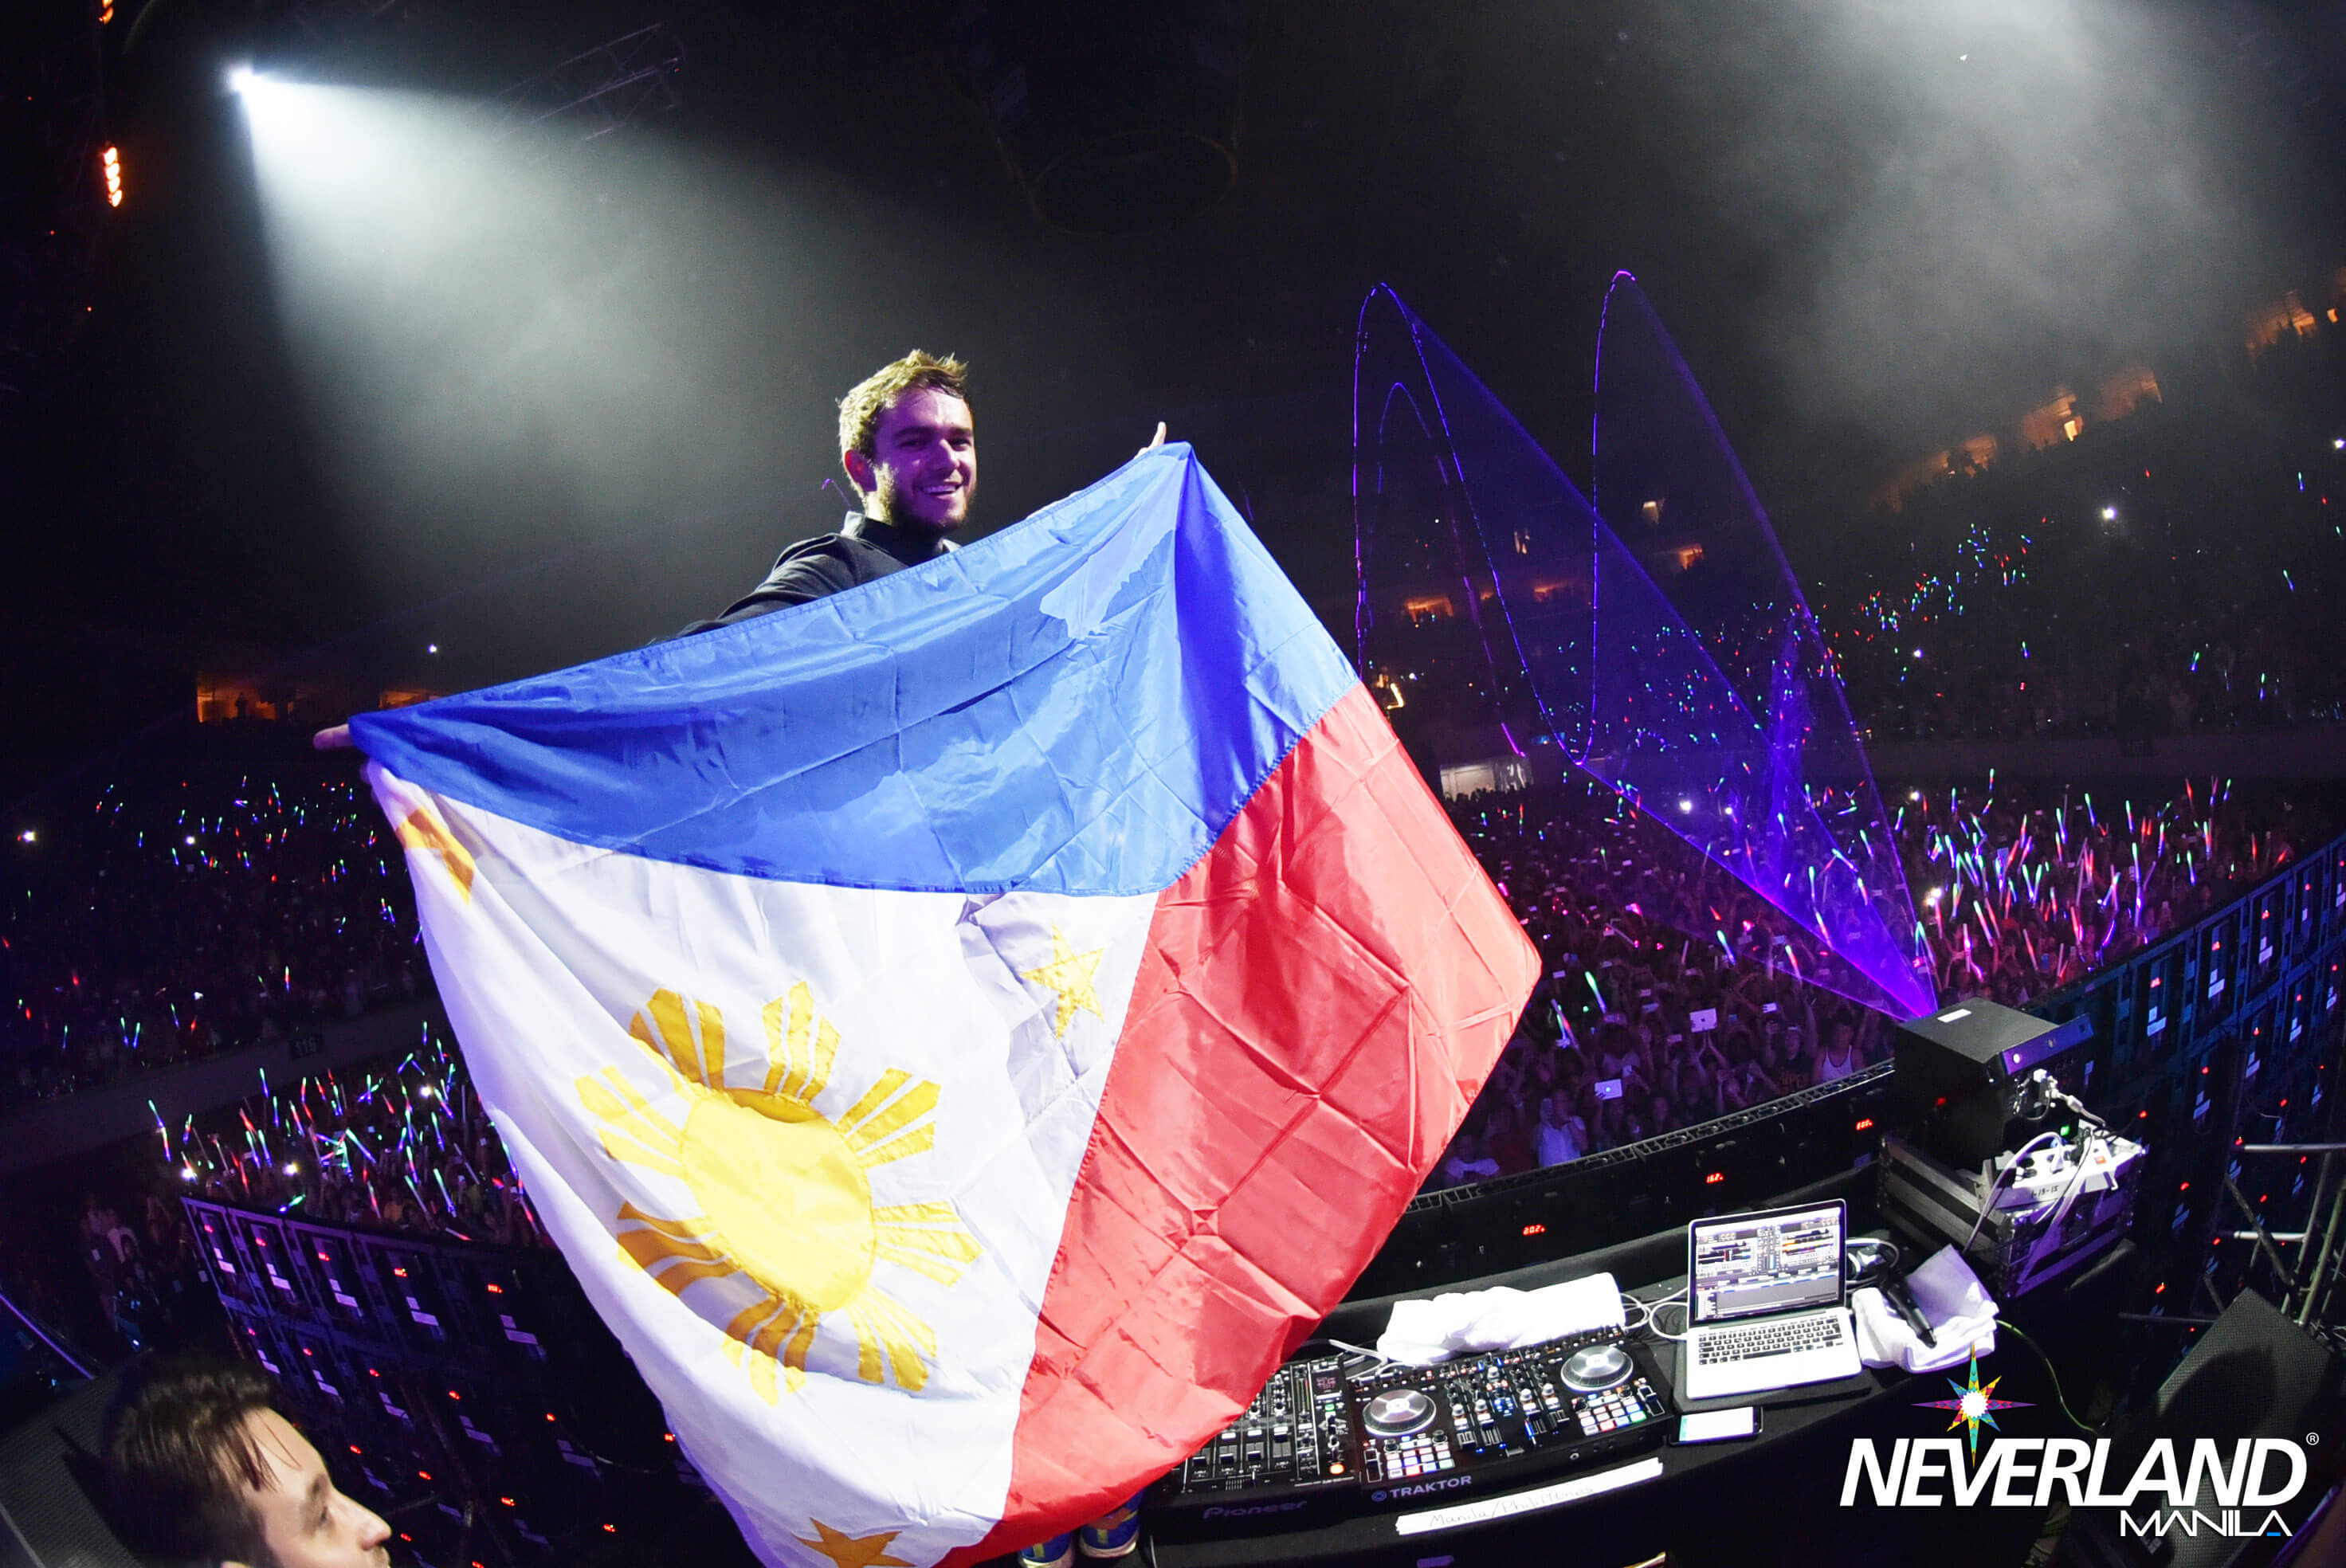 Neverland Manila and Zedd: The Magic of True Colors